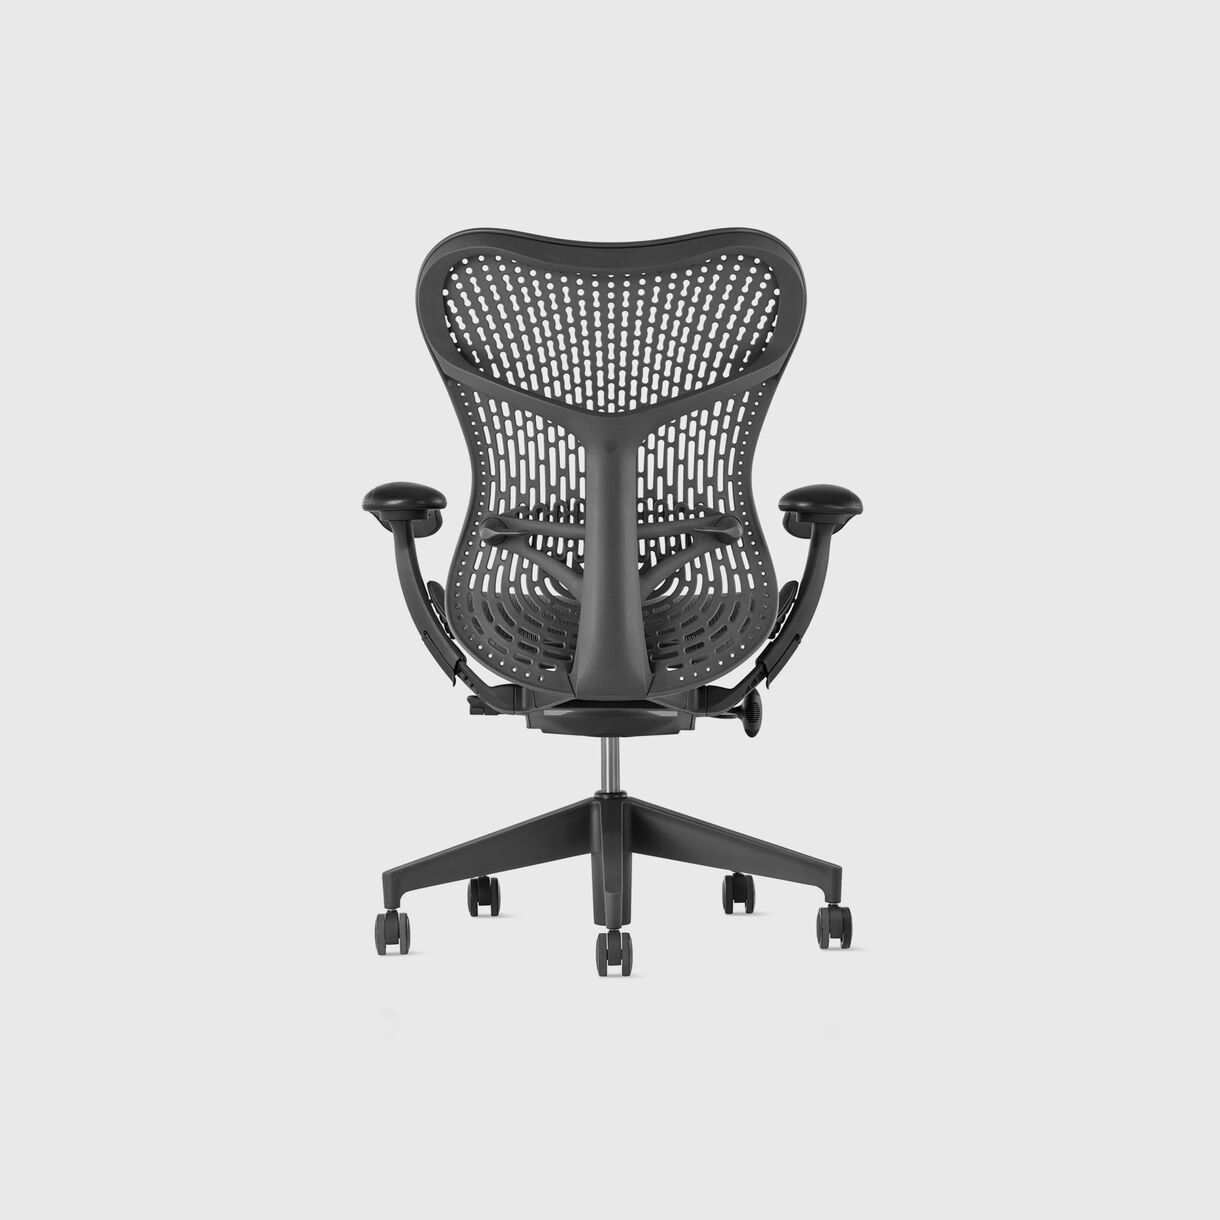 Mirra 2 Work Chair - TriFlex Graphite, Graphite Base & Frame - Fully Adjustable Arms